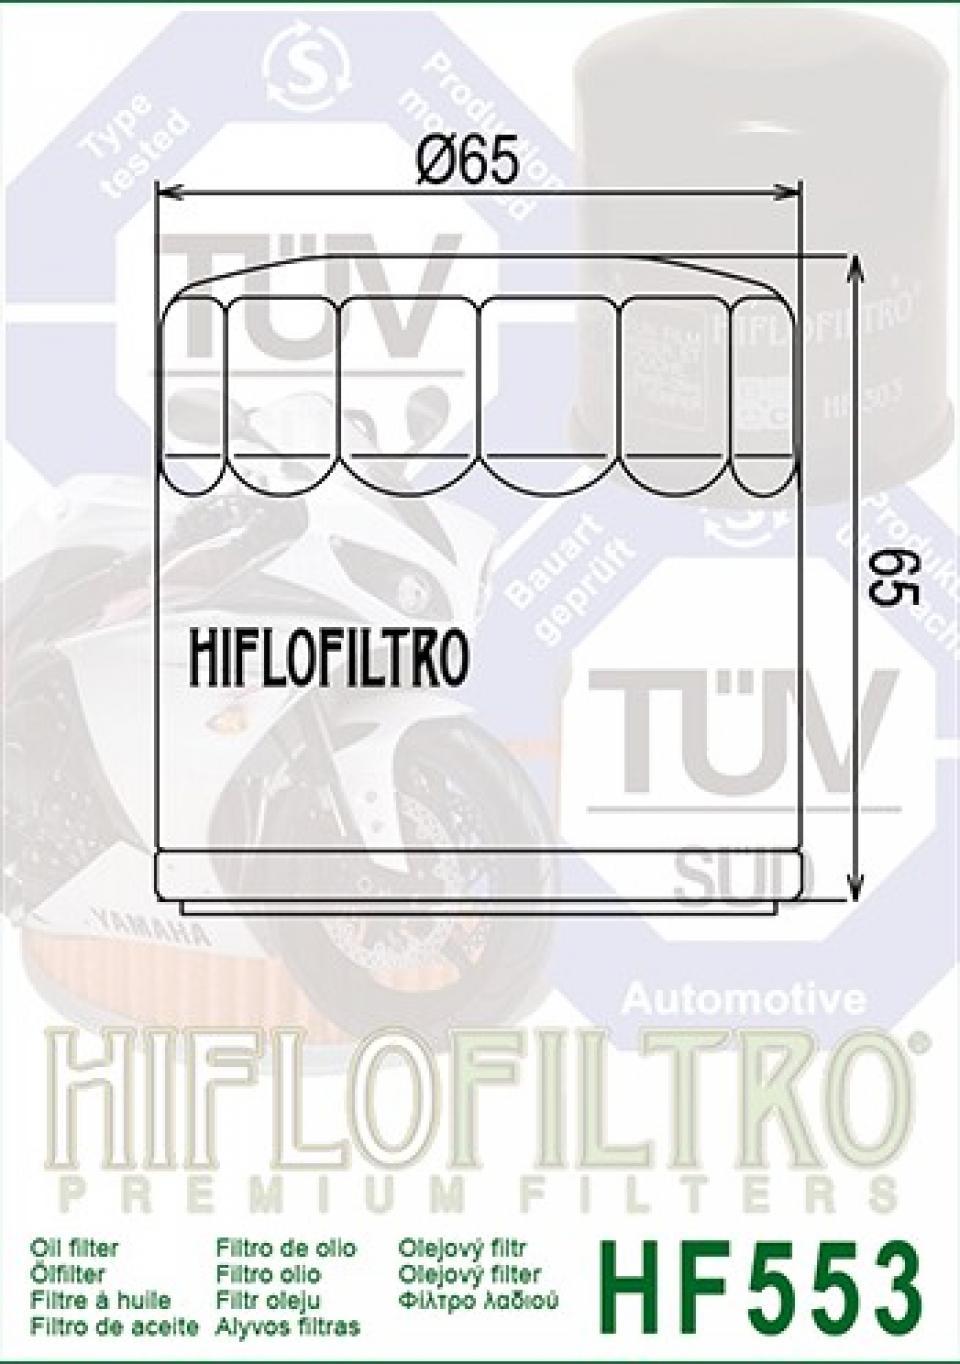 Filtre à huile Hiflofiltro pour ULM Benelli 1130 TORNADO R 2006 à 2015 Neuf